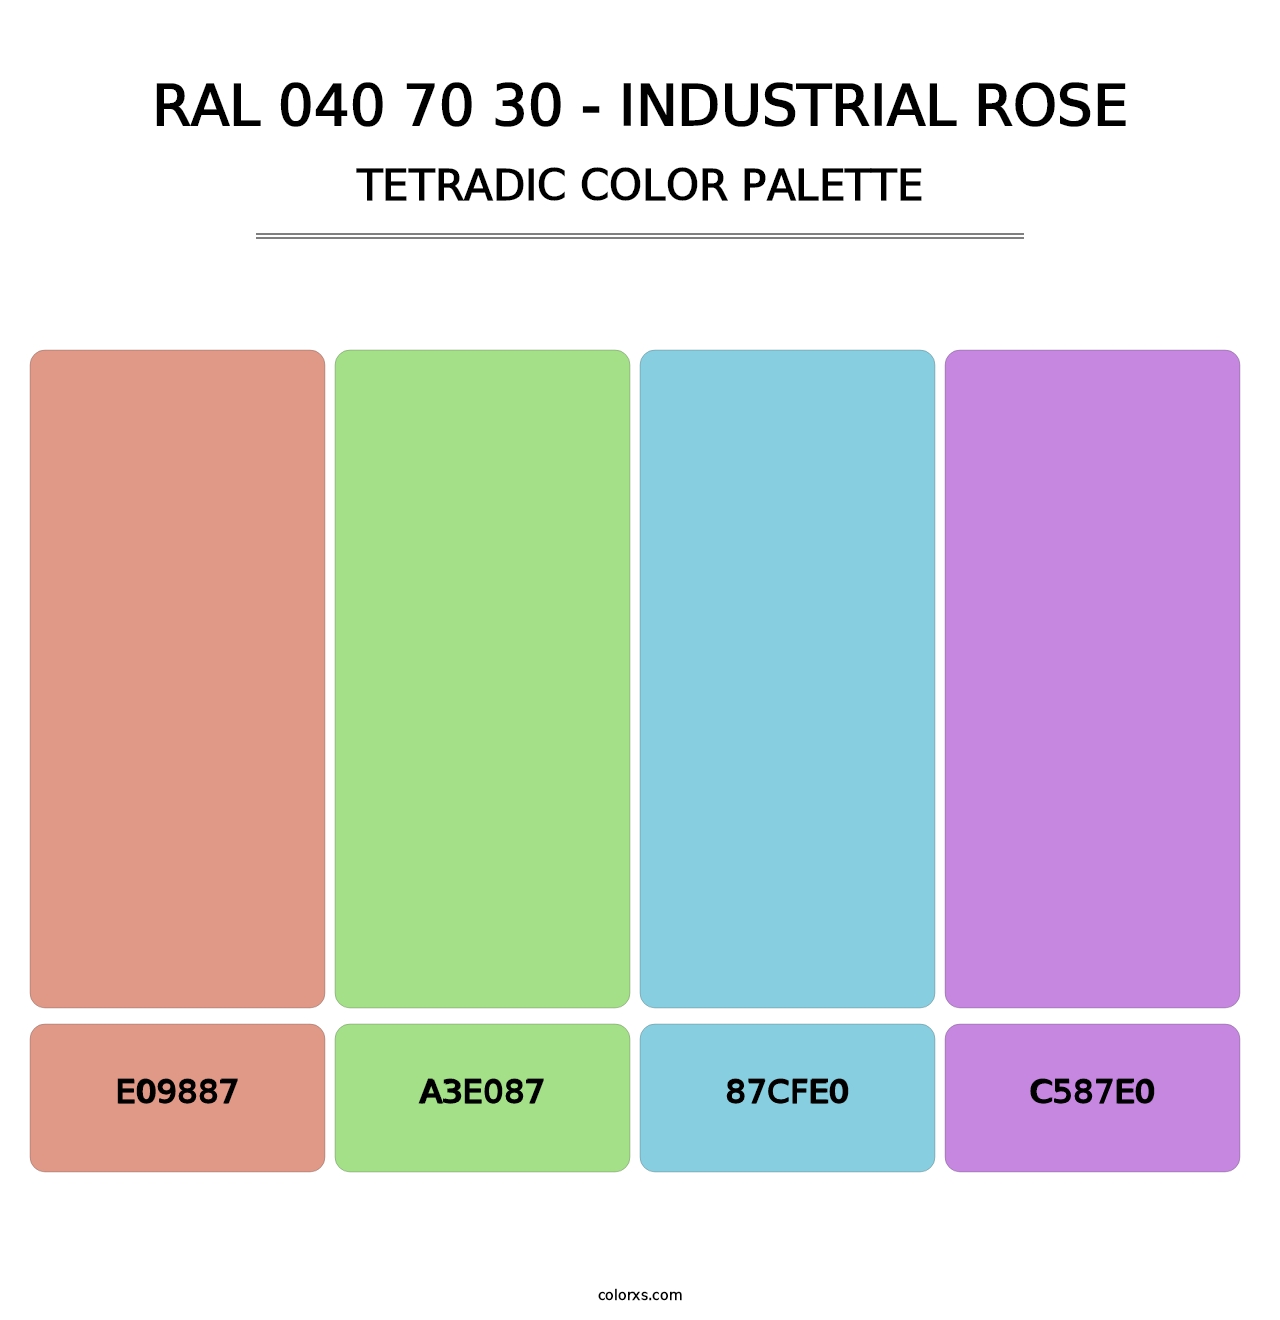 RAL 040 70 30 - Industrial Rose - Tetradic Color Palette